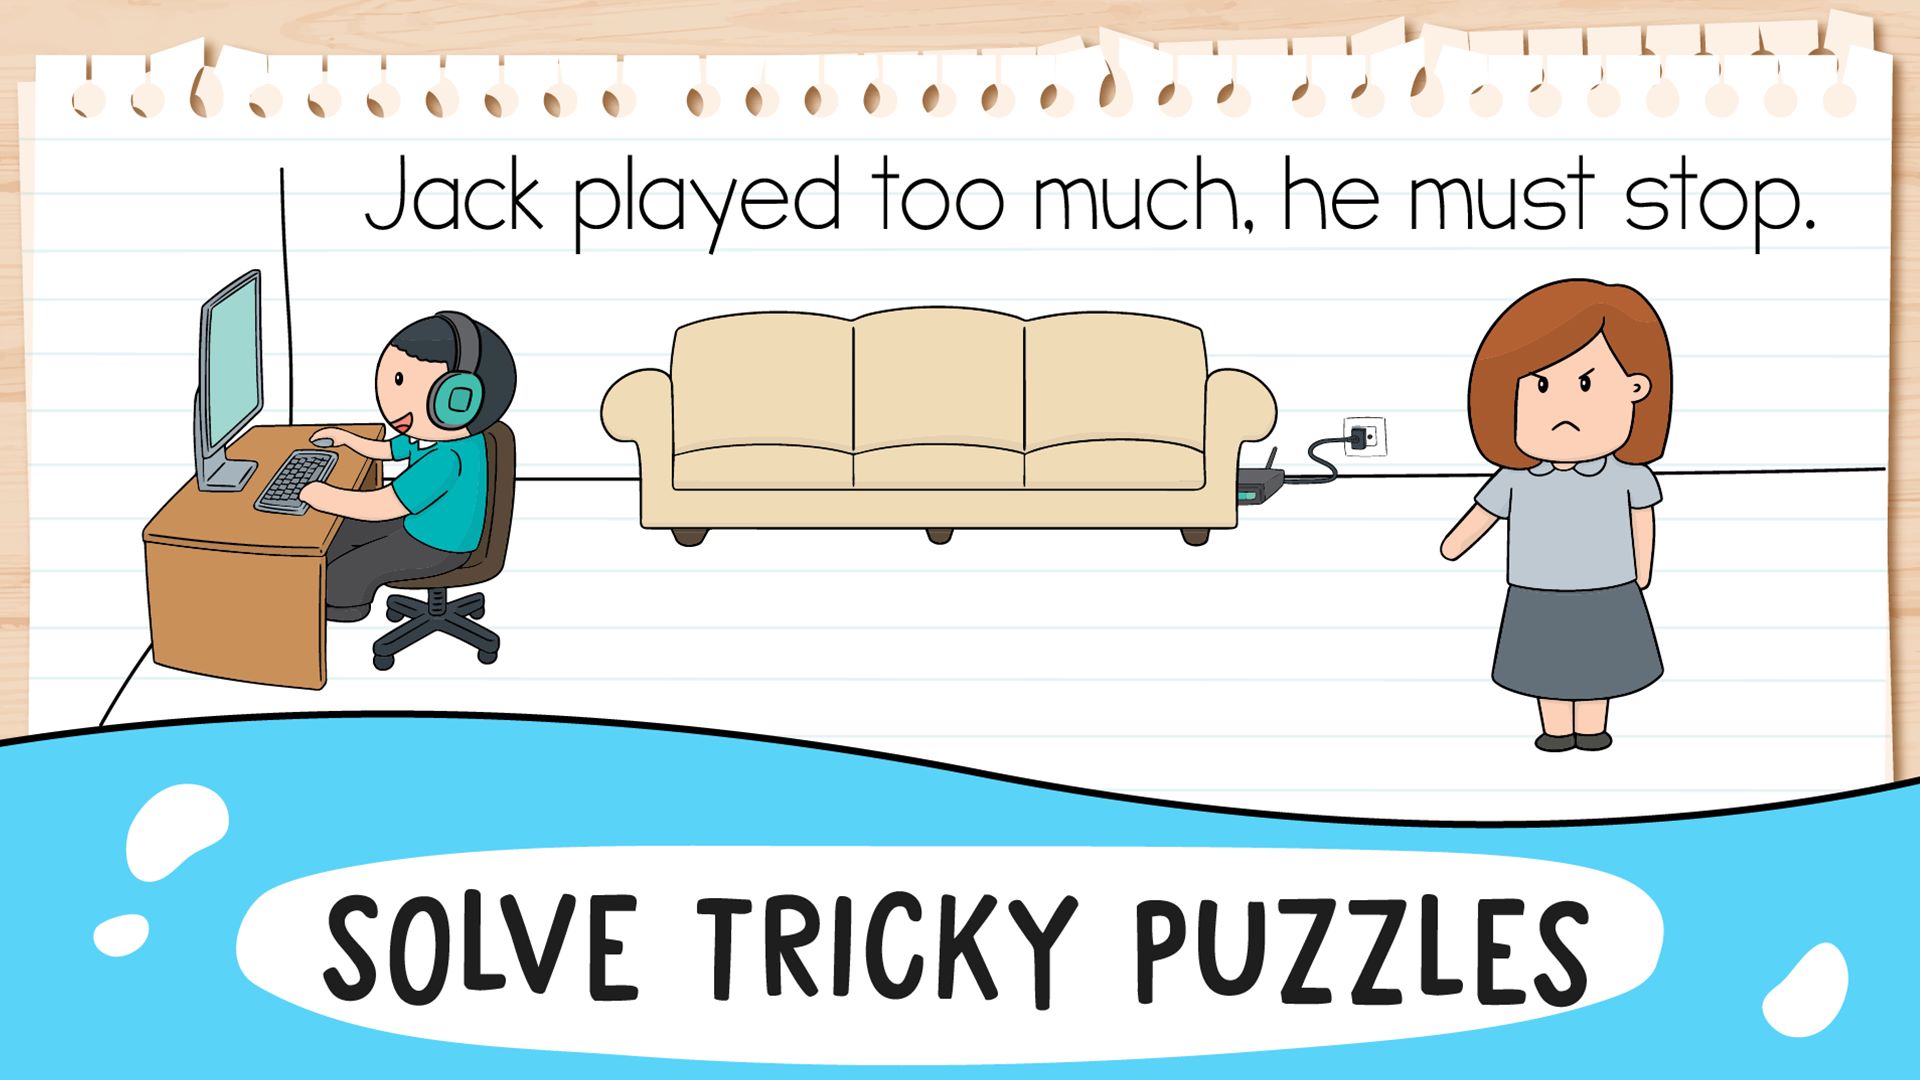 Brain Test: Tricky Puzzles Premium